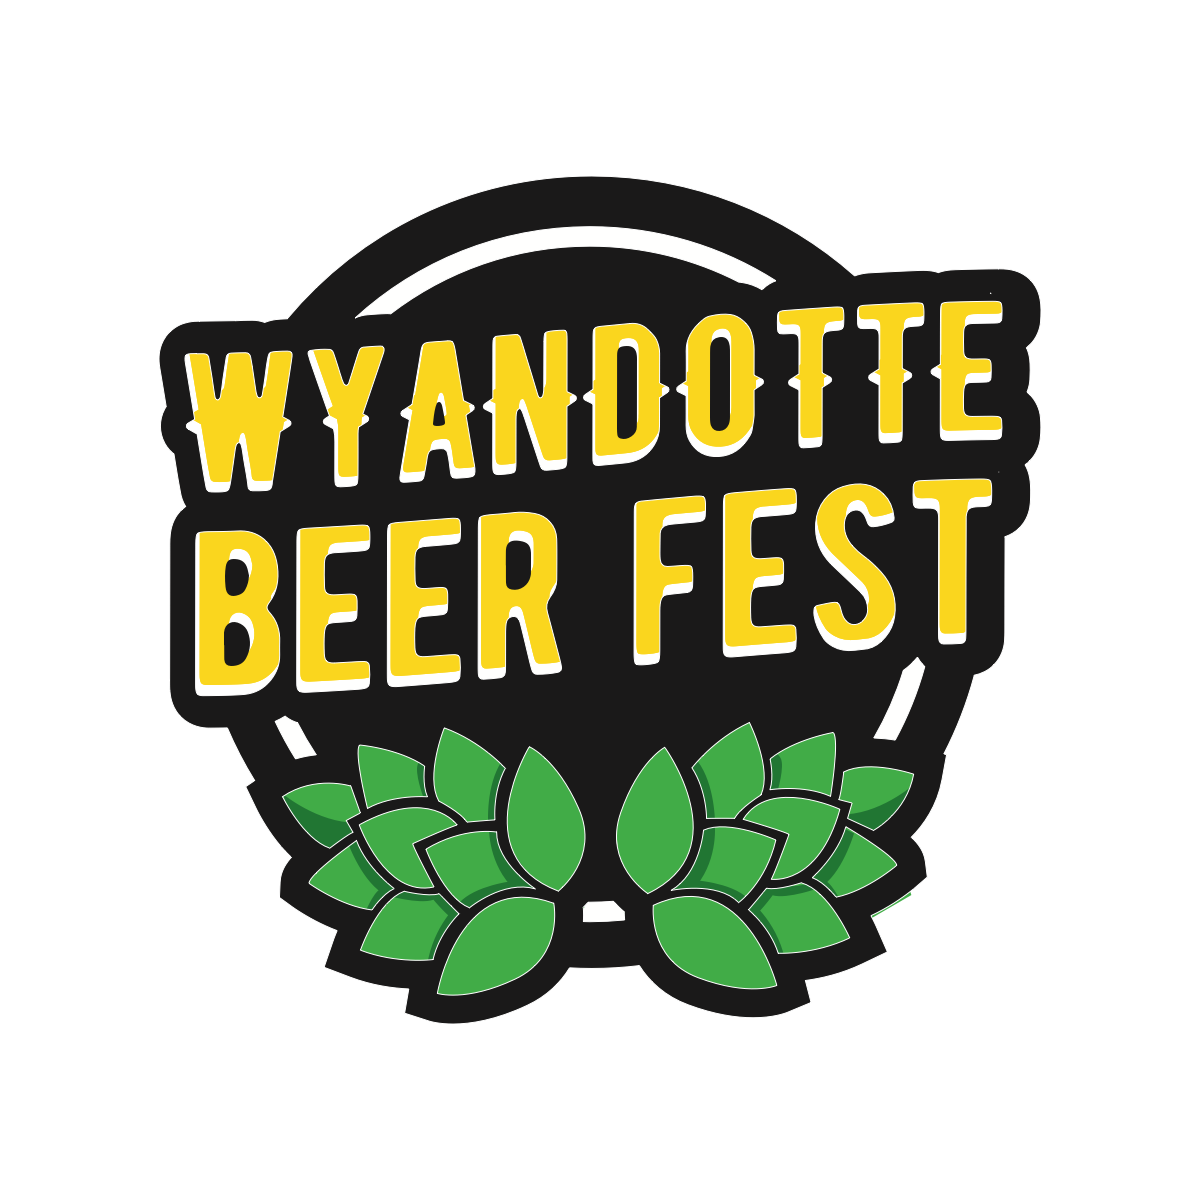 Wyandotte Beer Fest logo